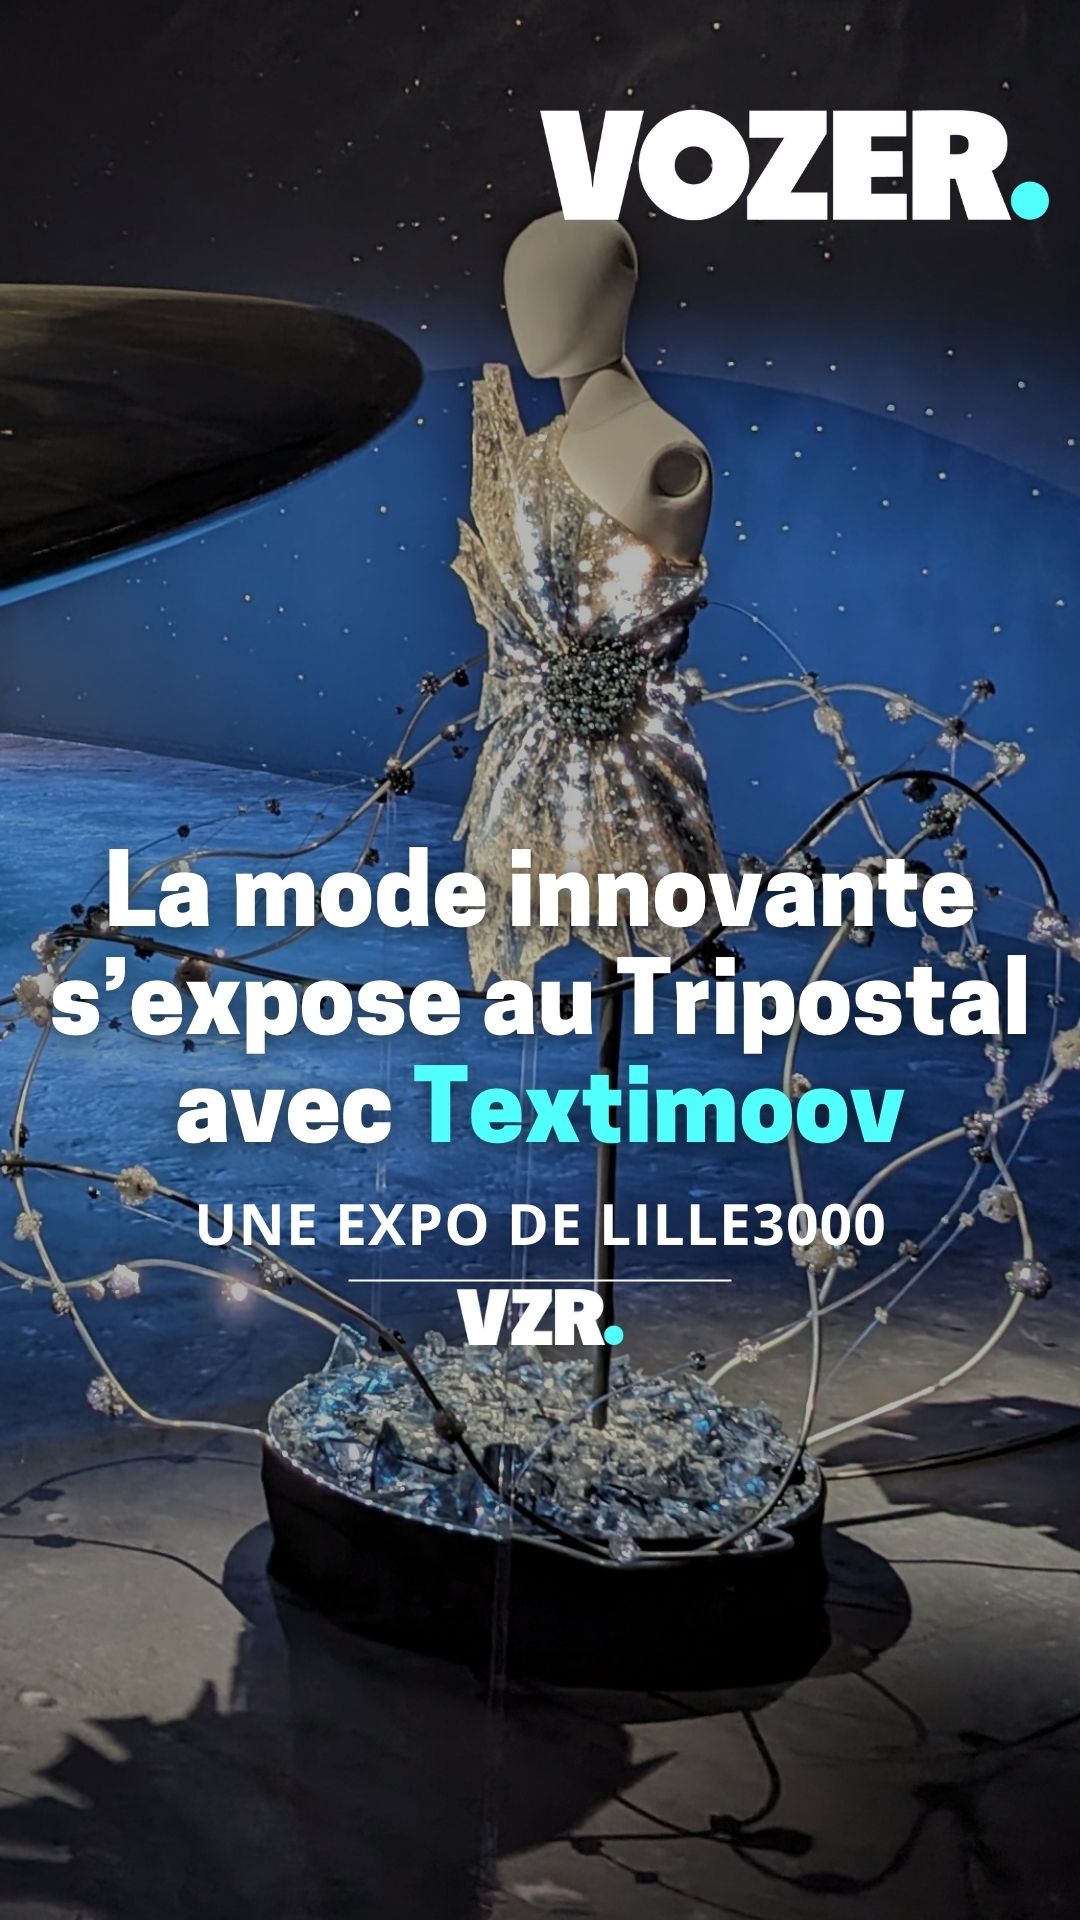 La mode innovante s’expose au Tripostal avec Textimoov